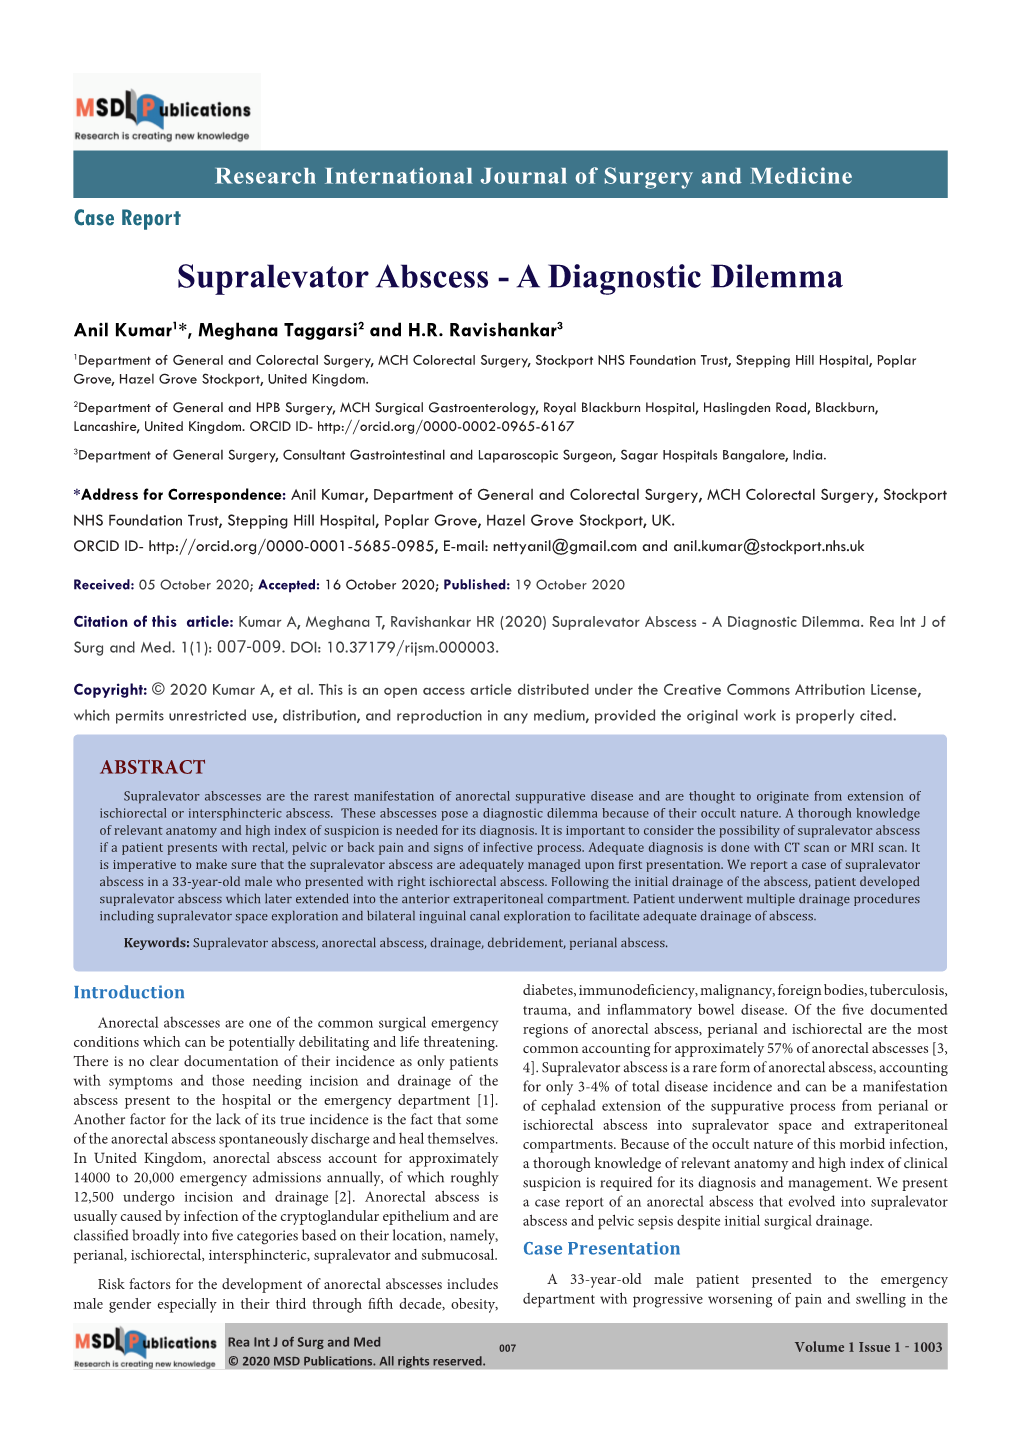 Supralevator Abscess - a Diagnostic Dilemma